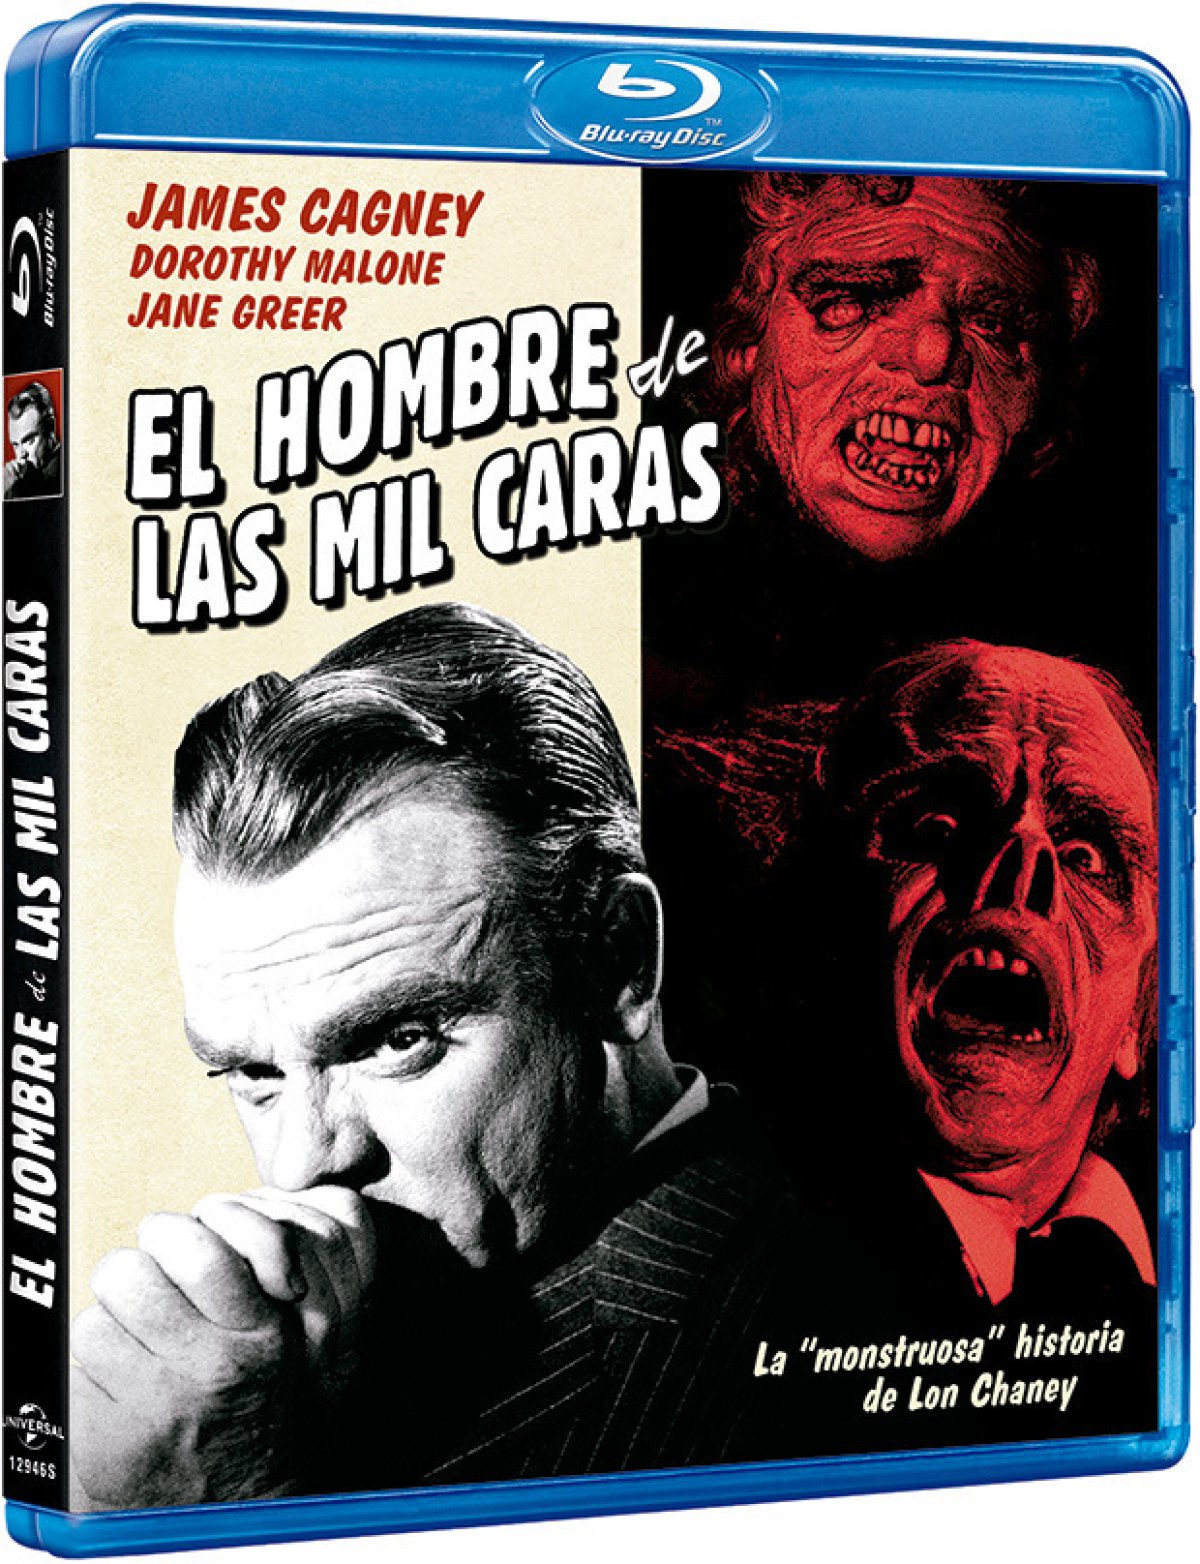 James Cagney (i) en la carátula promocional de &#039;El hombre de las mil caras&#039;